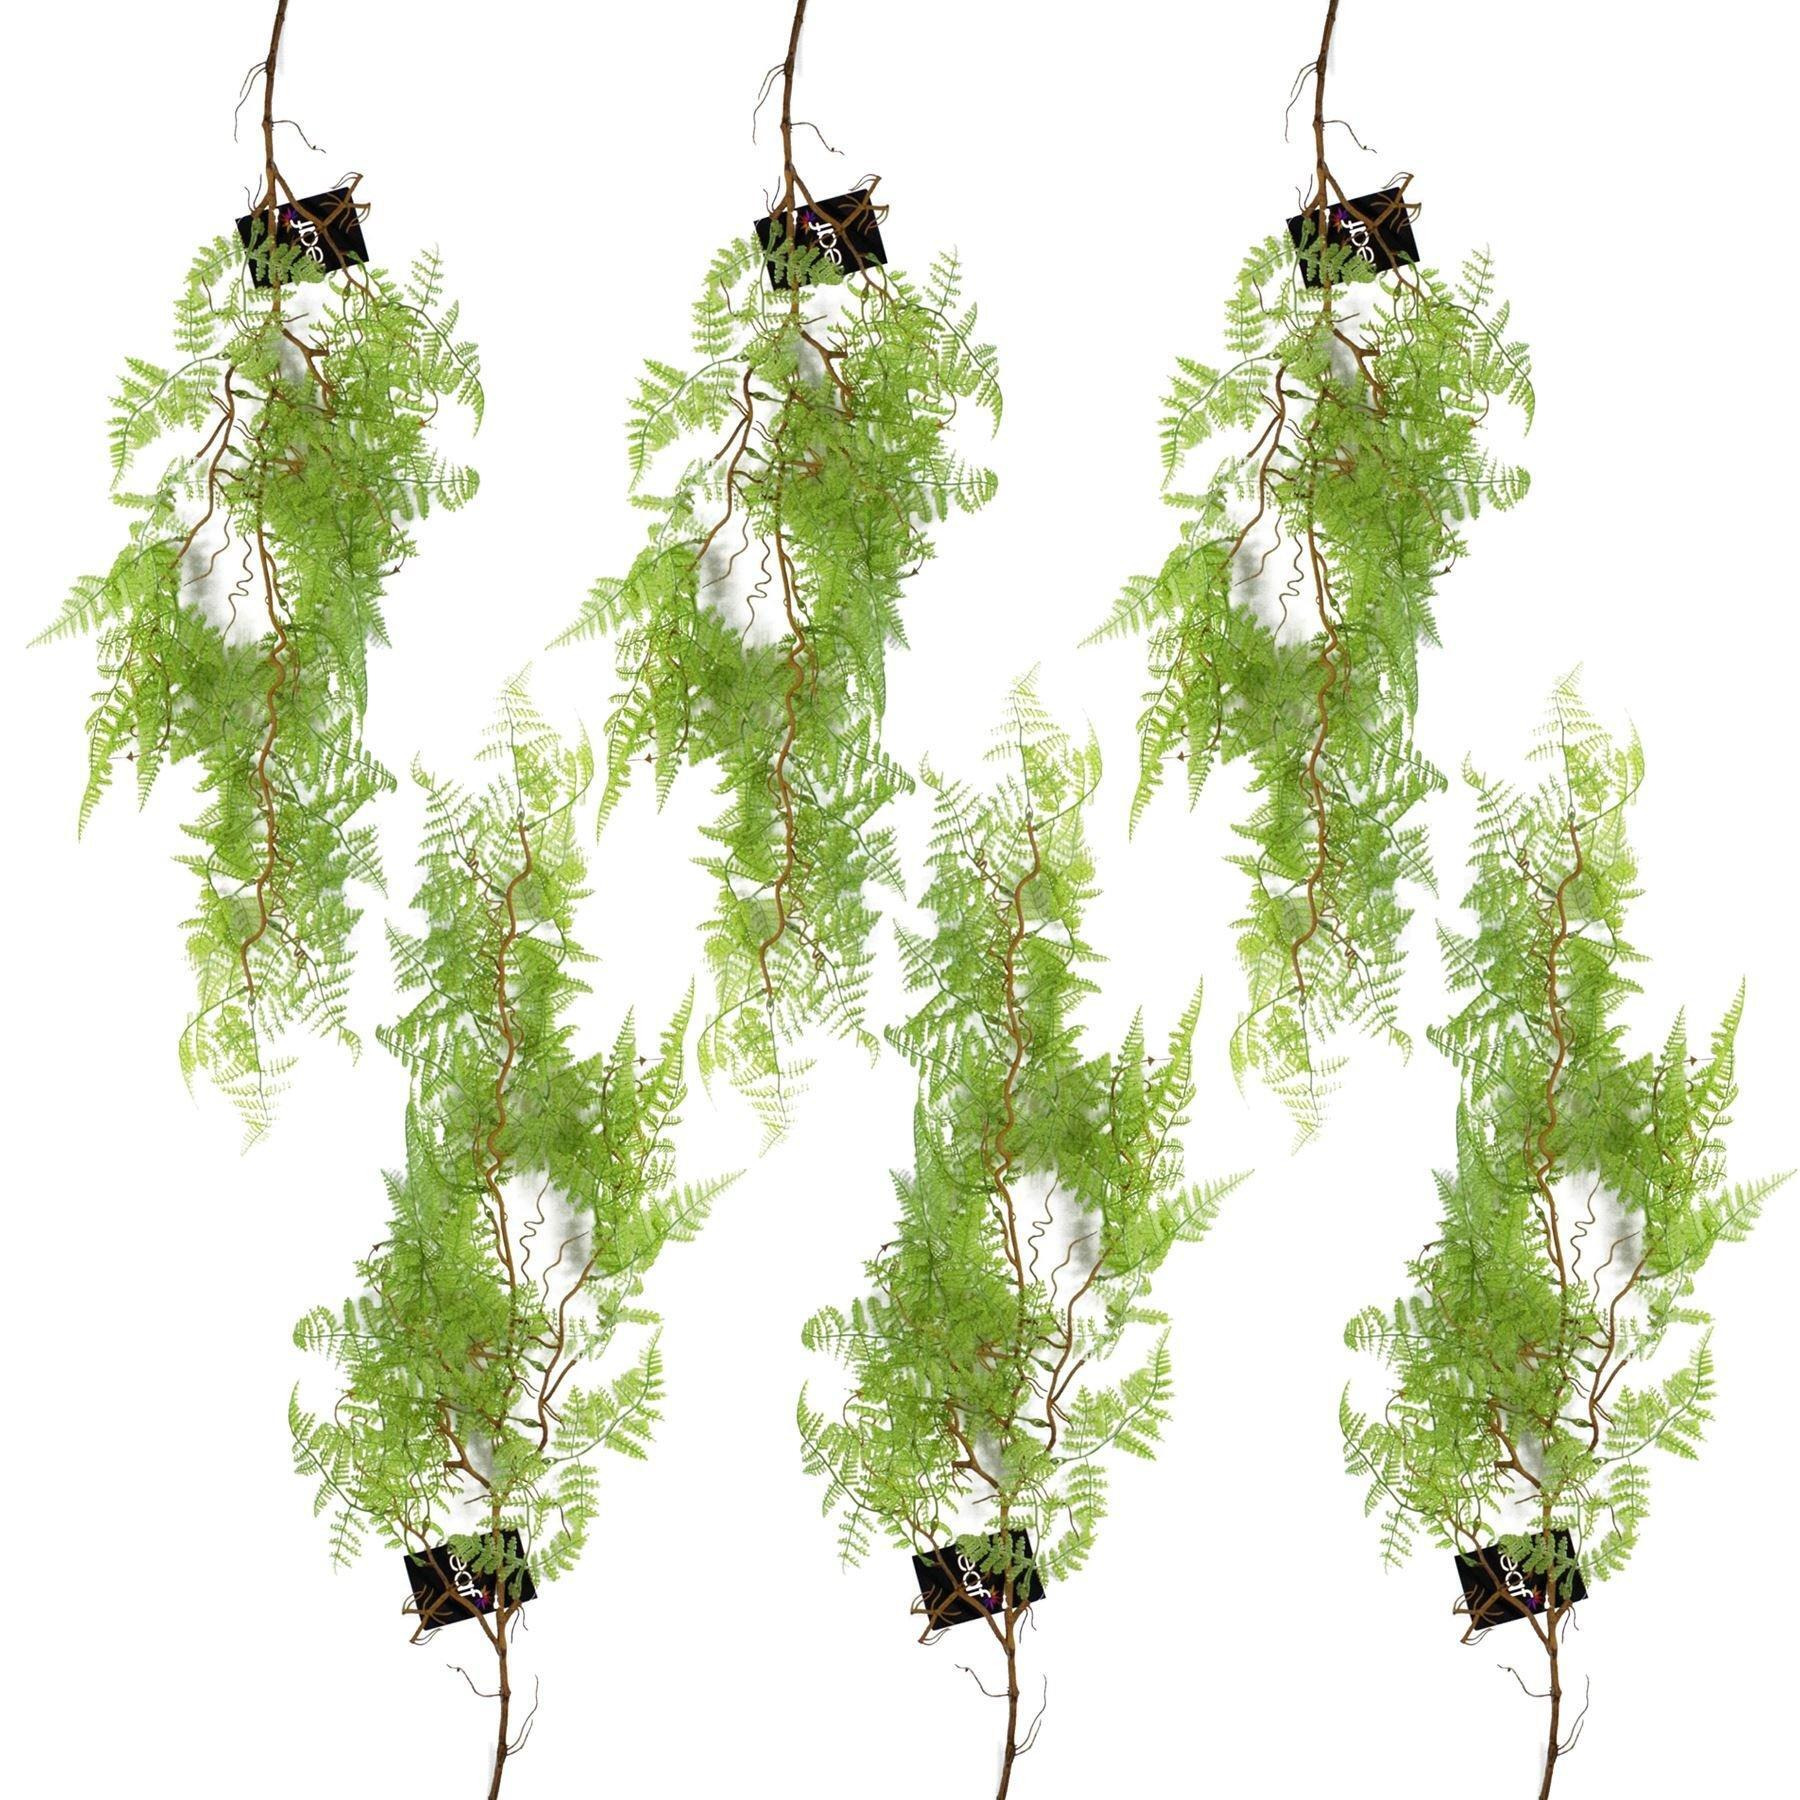 6 x 100cm Artificial Hanging Maidenhair Fern Plant Light Green - image 1